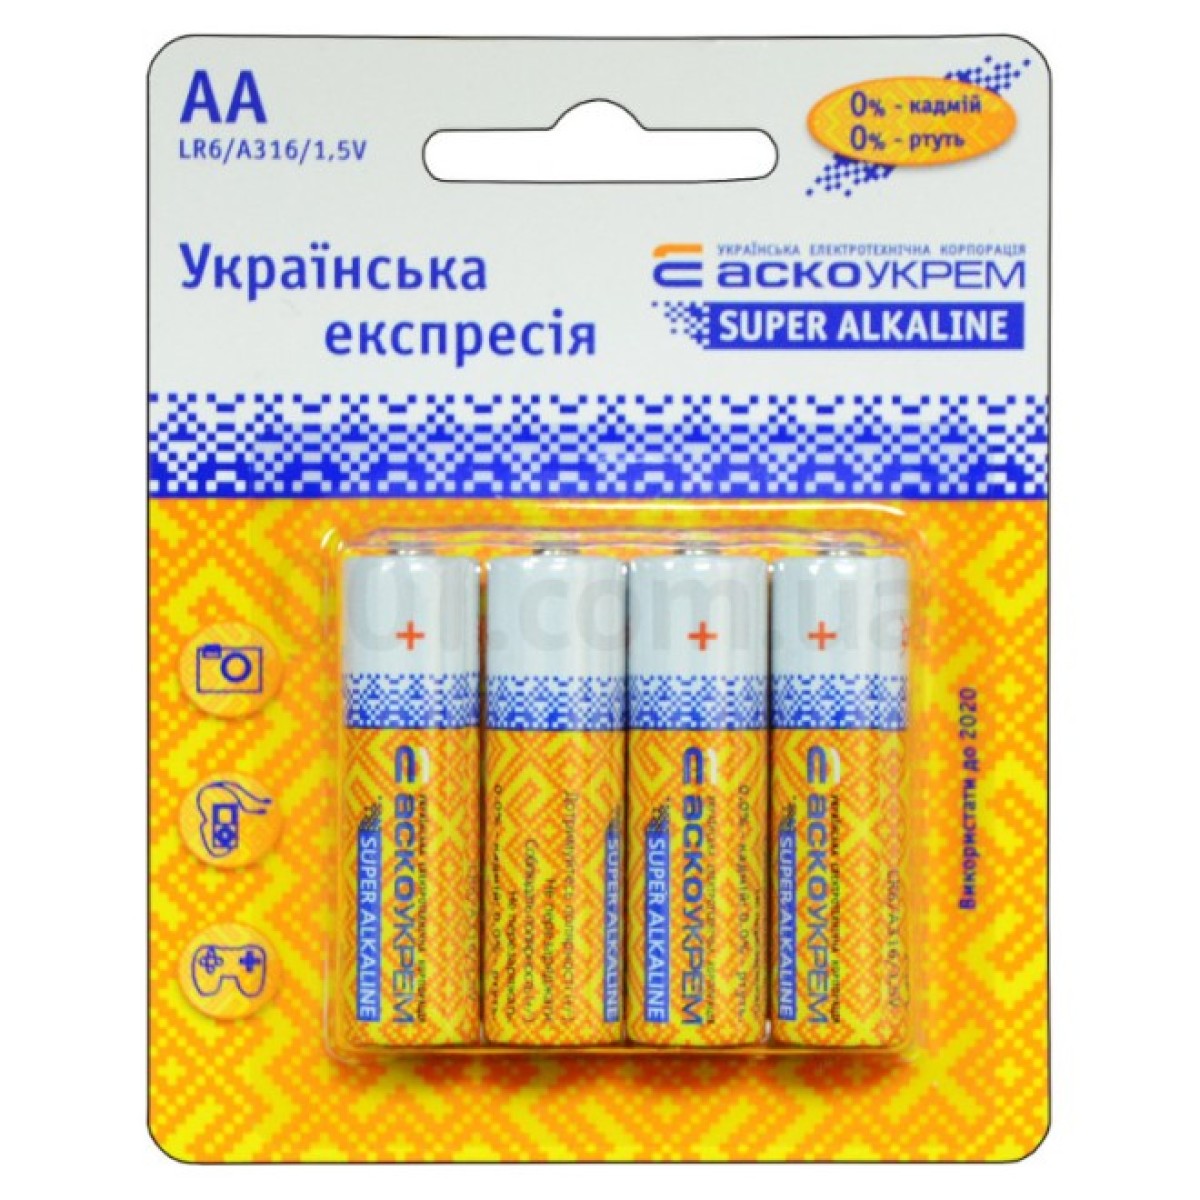 Батарейка щелочная AА.LR6.BL4, типоразмер AA упаковка blister 4 шт., АСКО-УКРЕМ 256_256.jpg